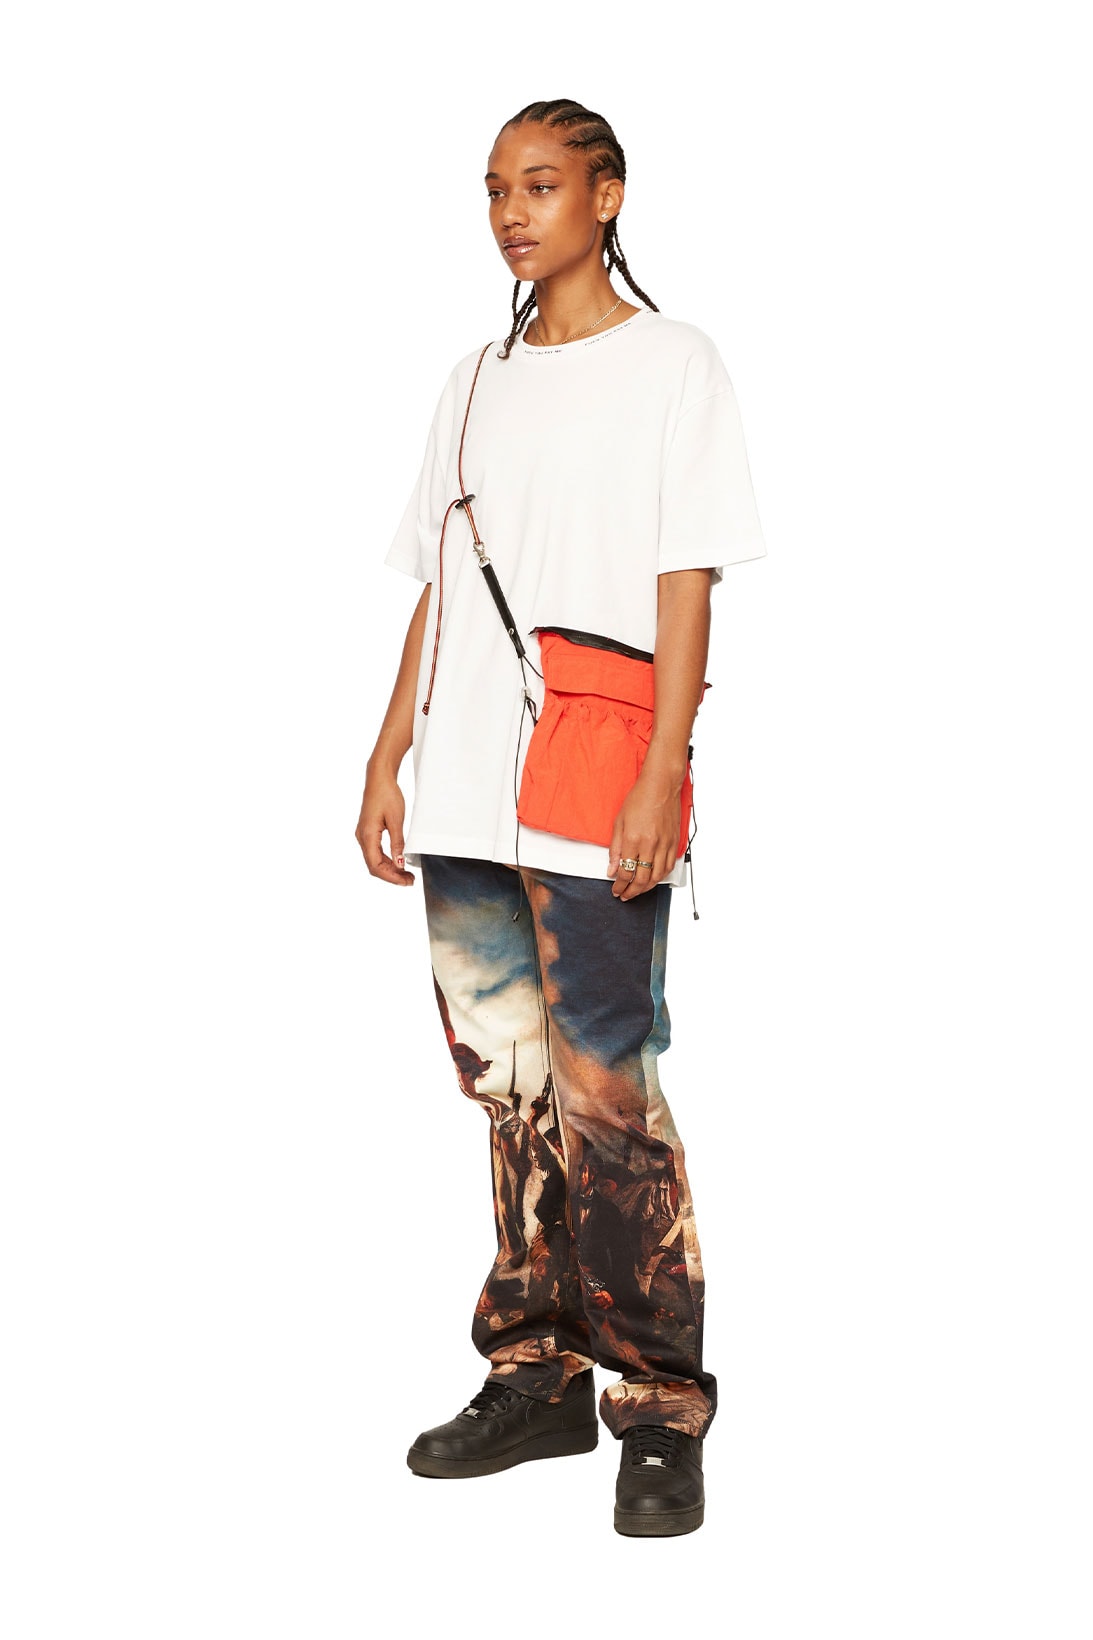 atelier new regime montreal brand fall winter lookbook white tshirt orange crossbody bag graphic trousers